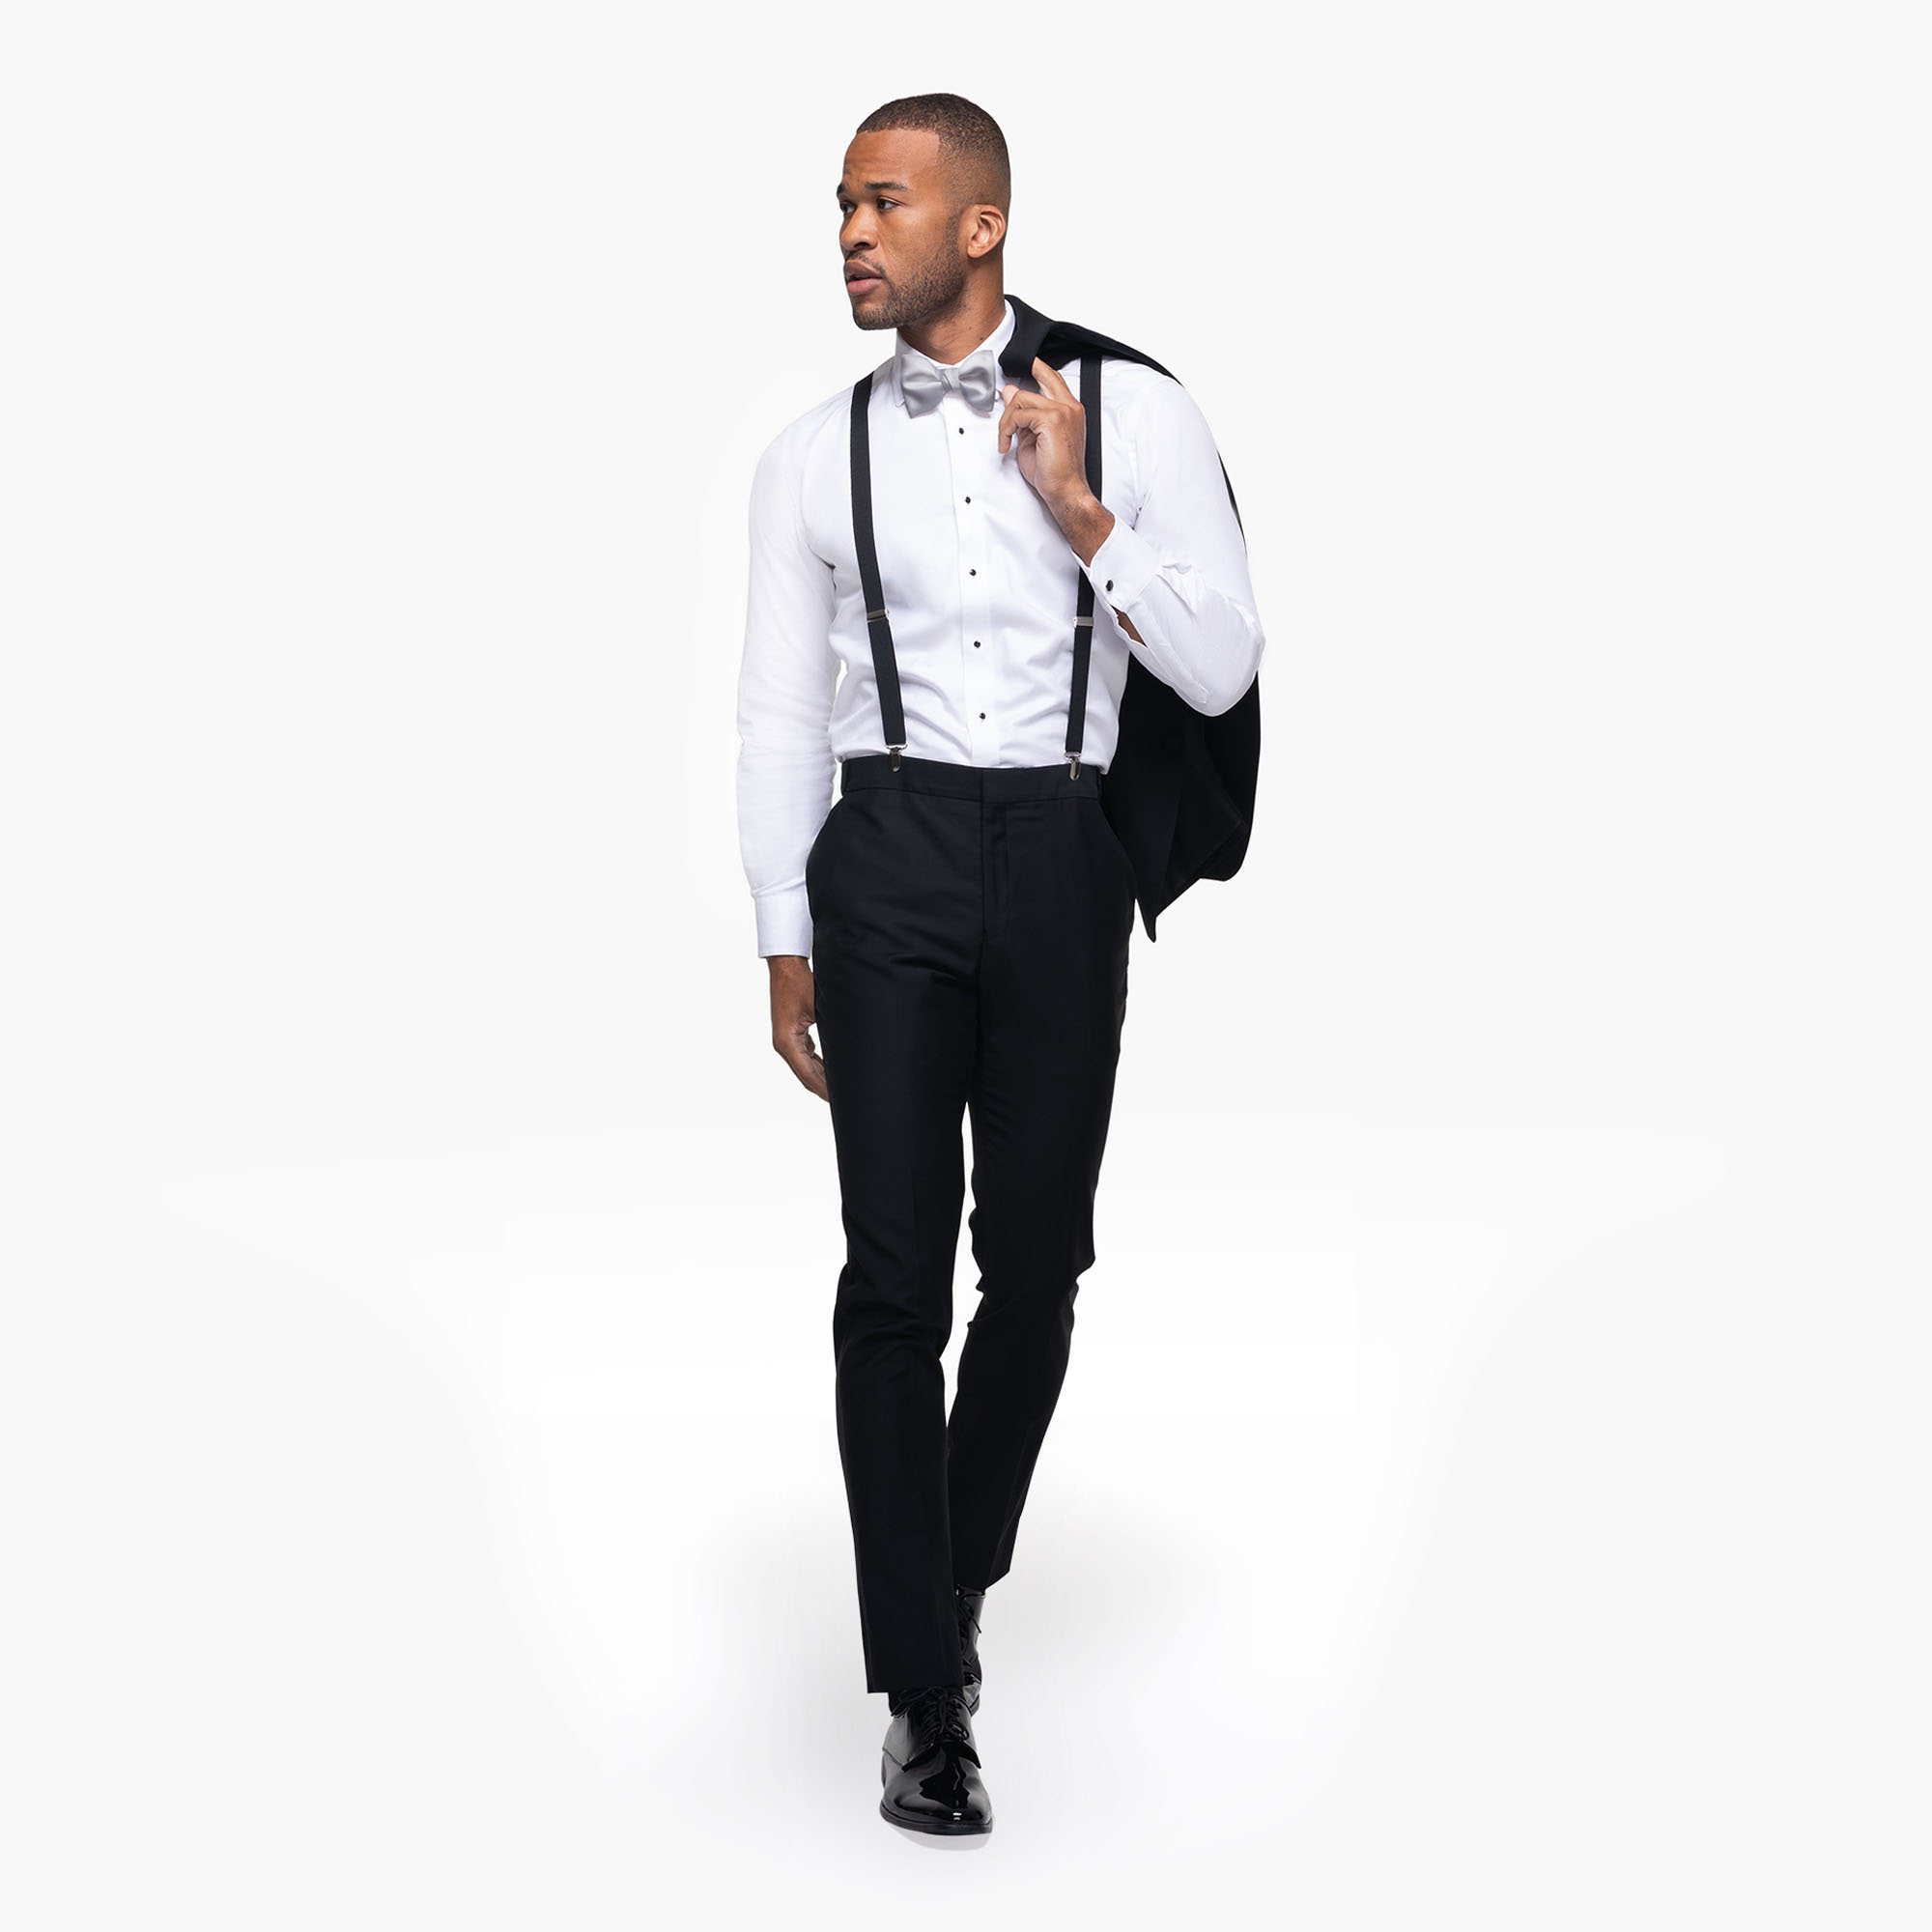 White Suspenders - Tuxedo & Suits: San Jose